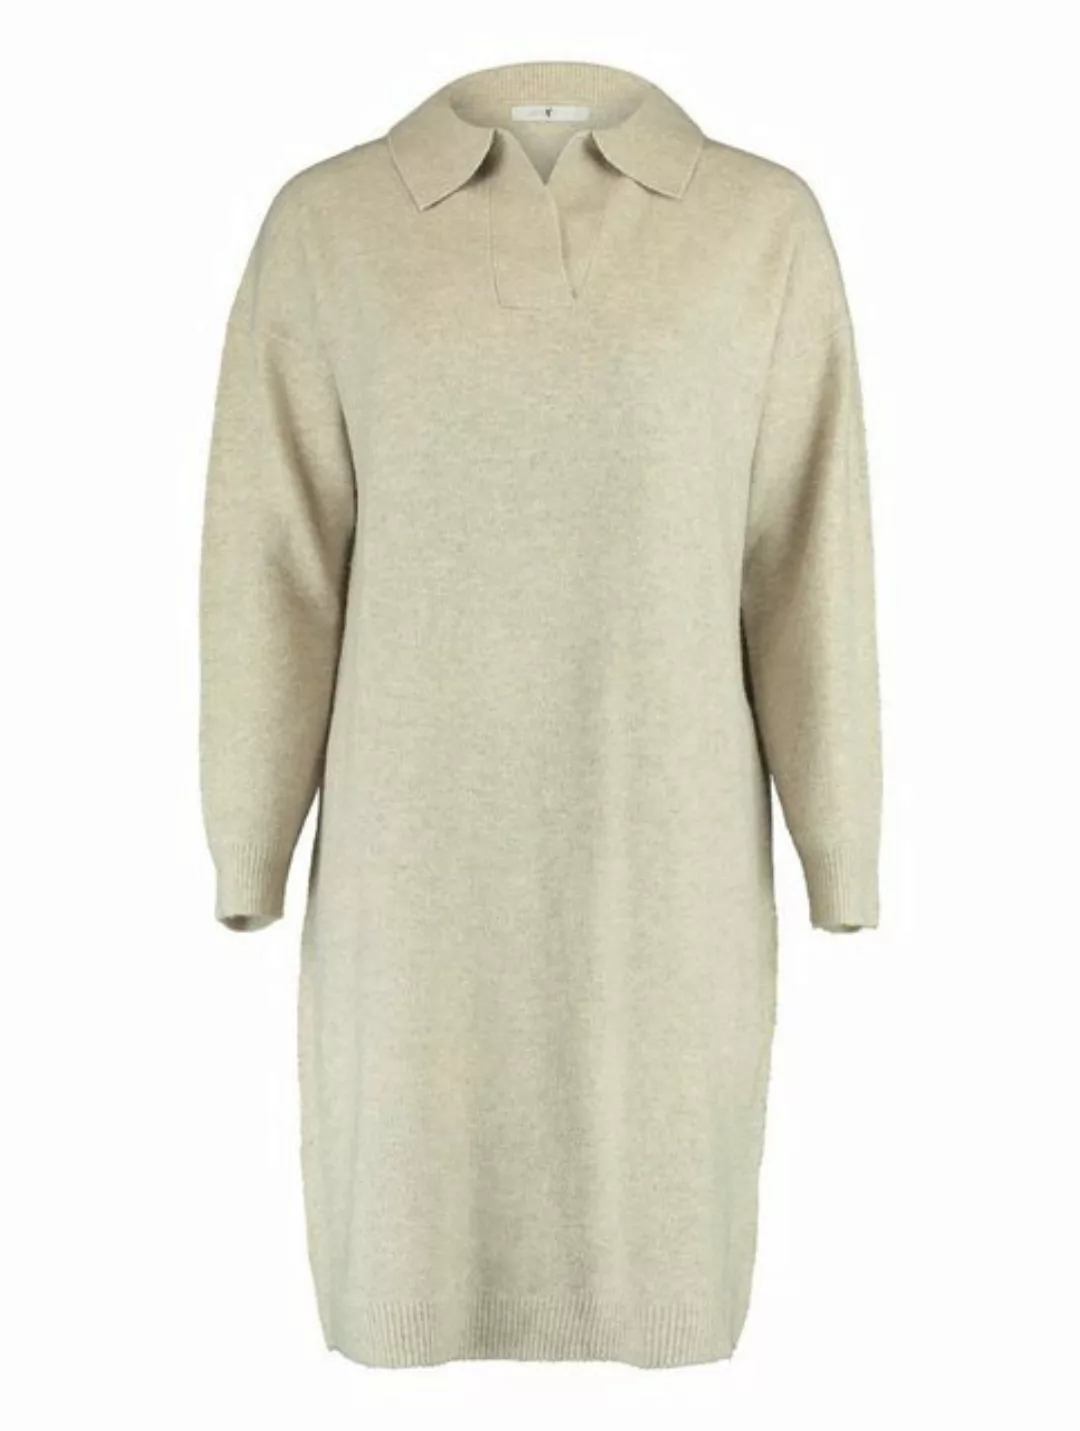 HaILY’S Shirtkleid Langarm Strickkleid Mini Pullover Dress V-Ausschnitt ENY günstig online kaufen